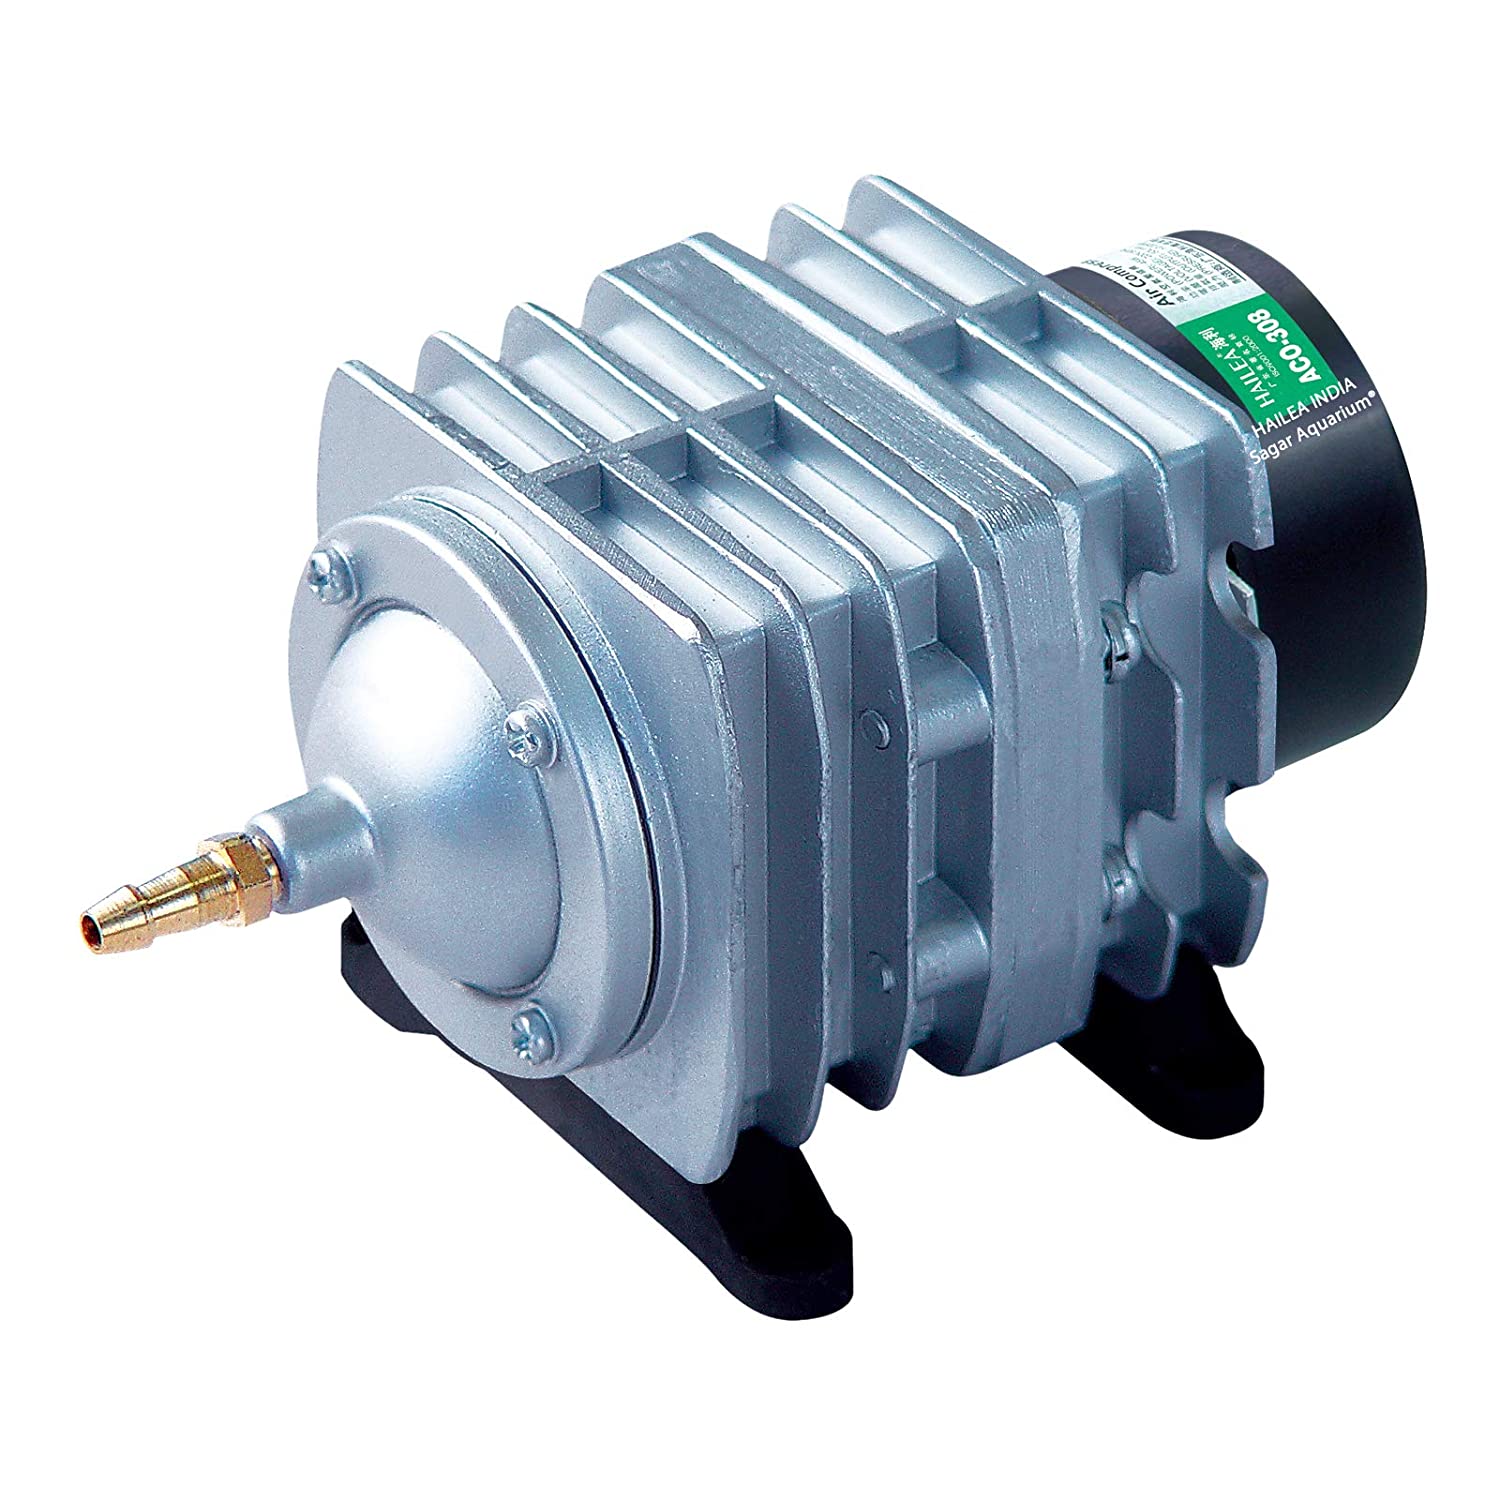 Aerator Pump Aco 308 (30 Watt)-Electricity